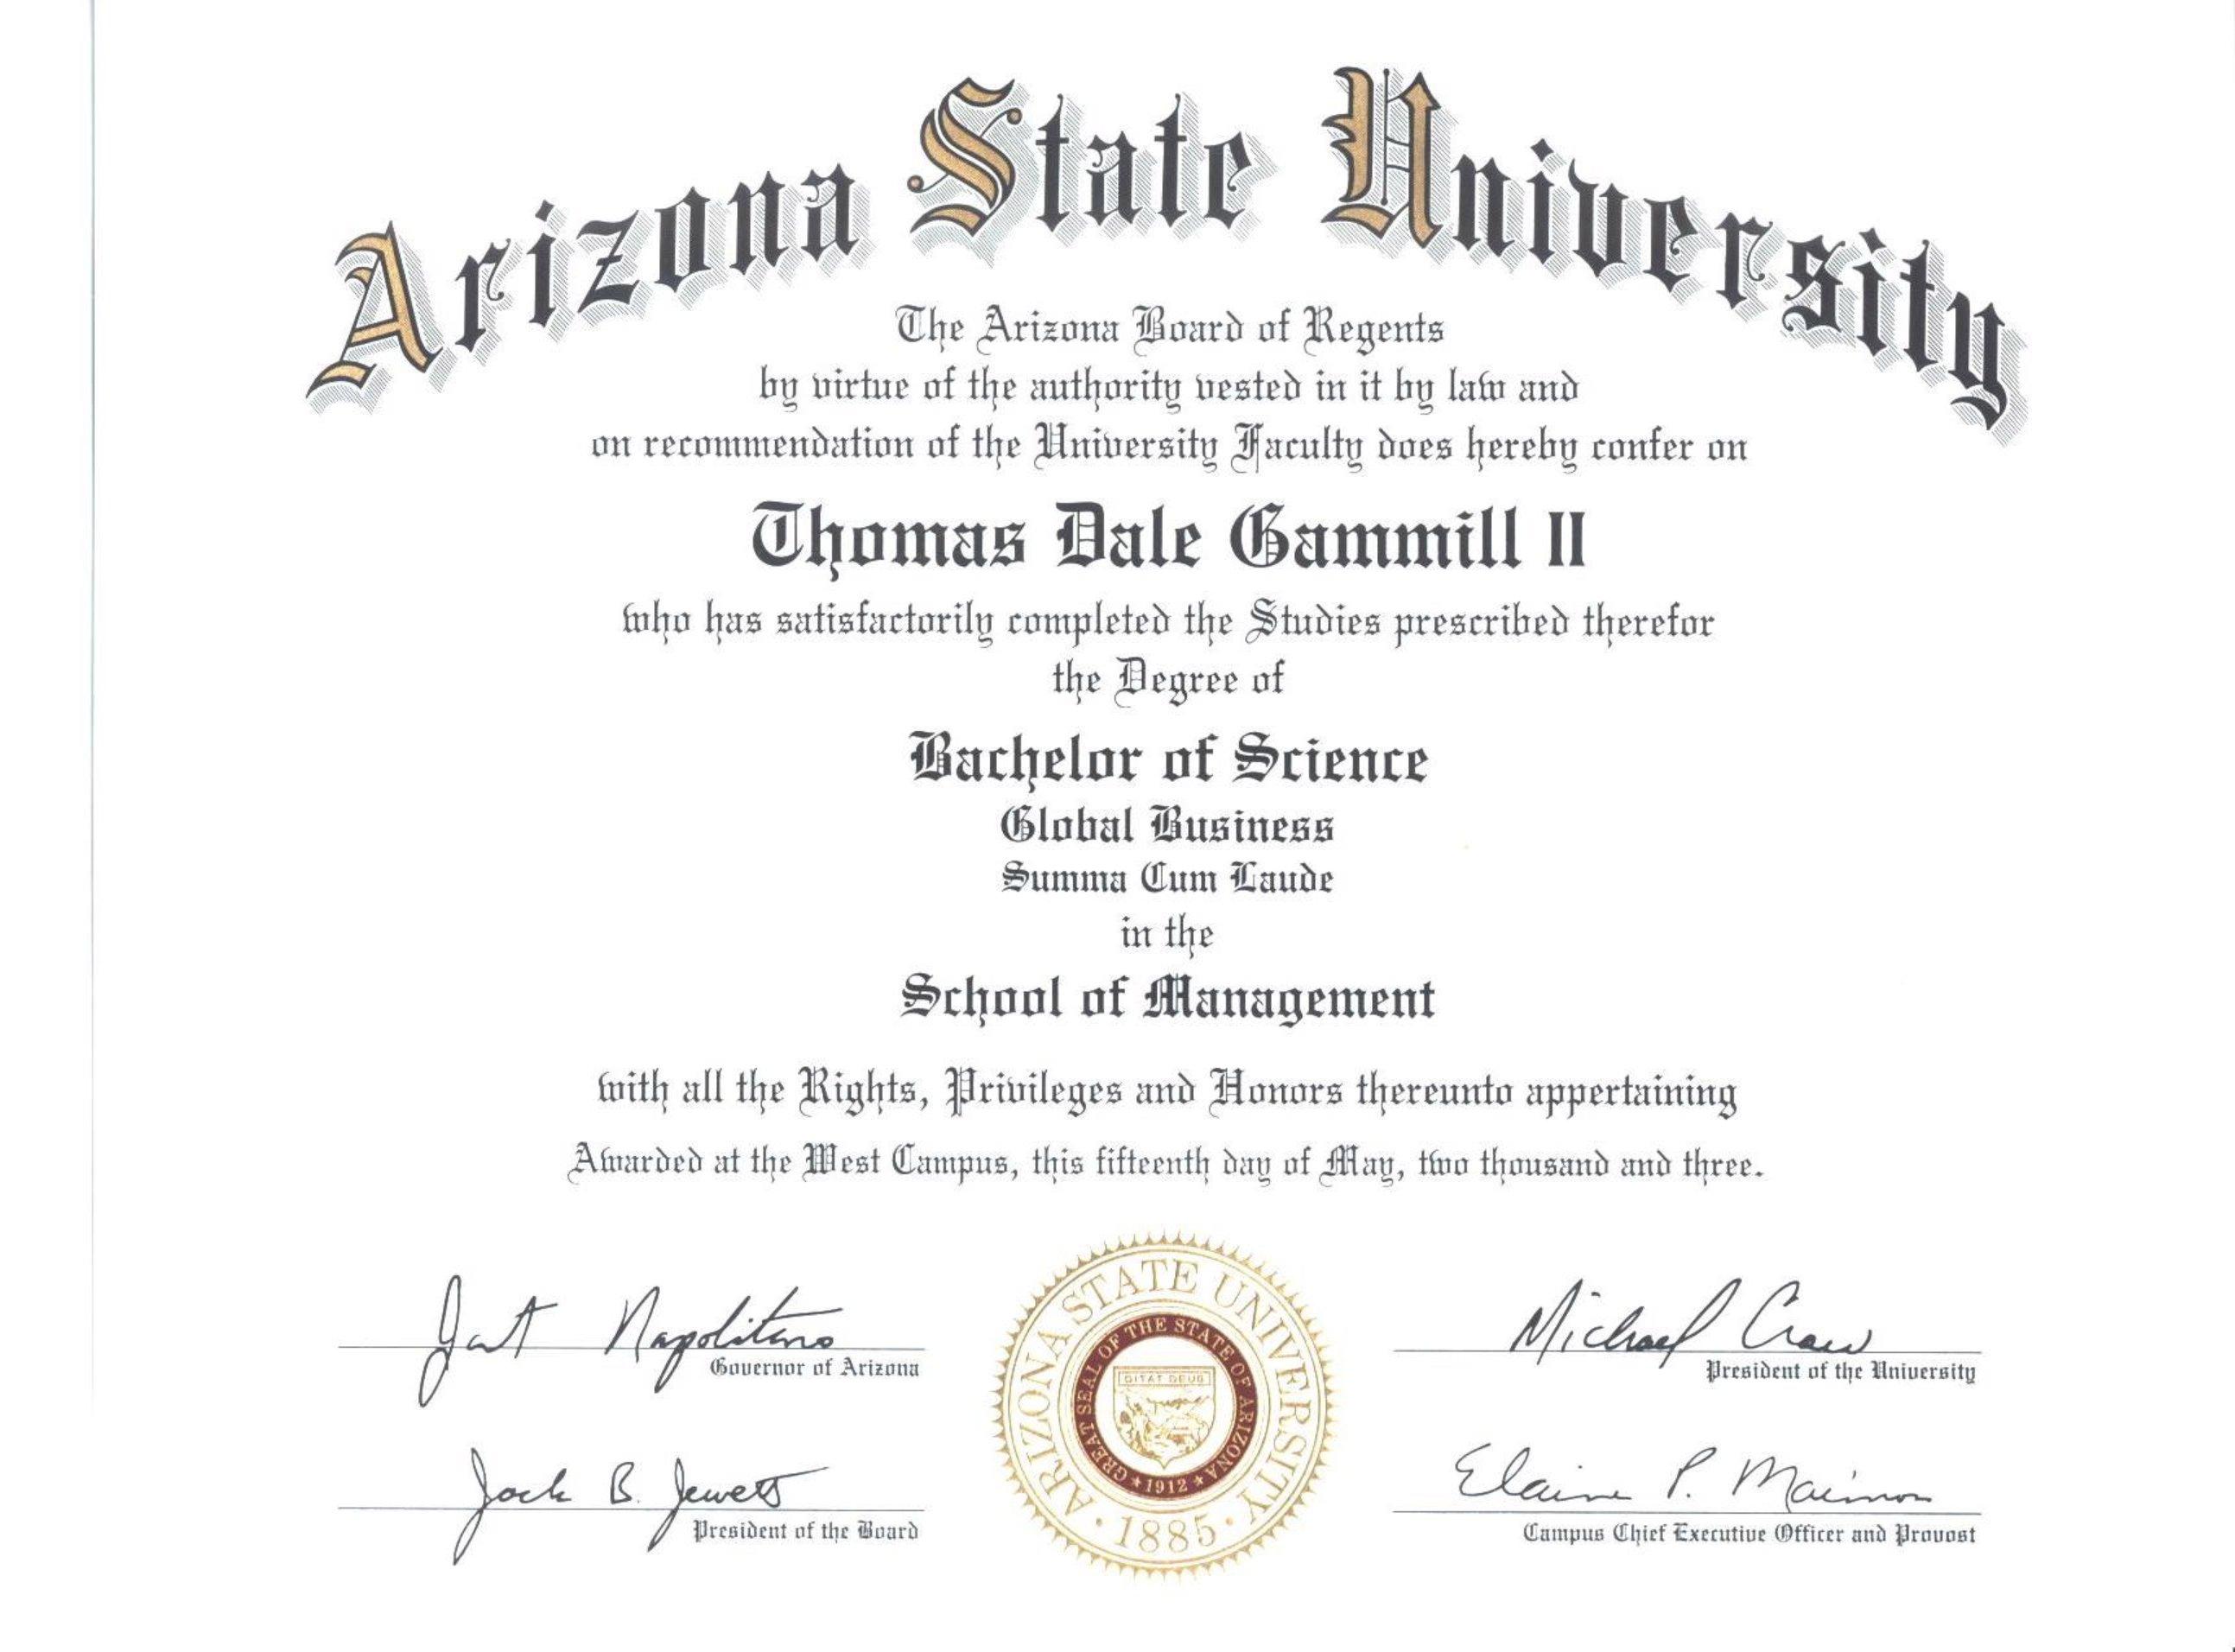 graduate degree